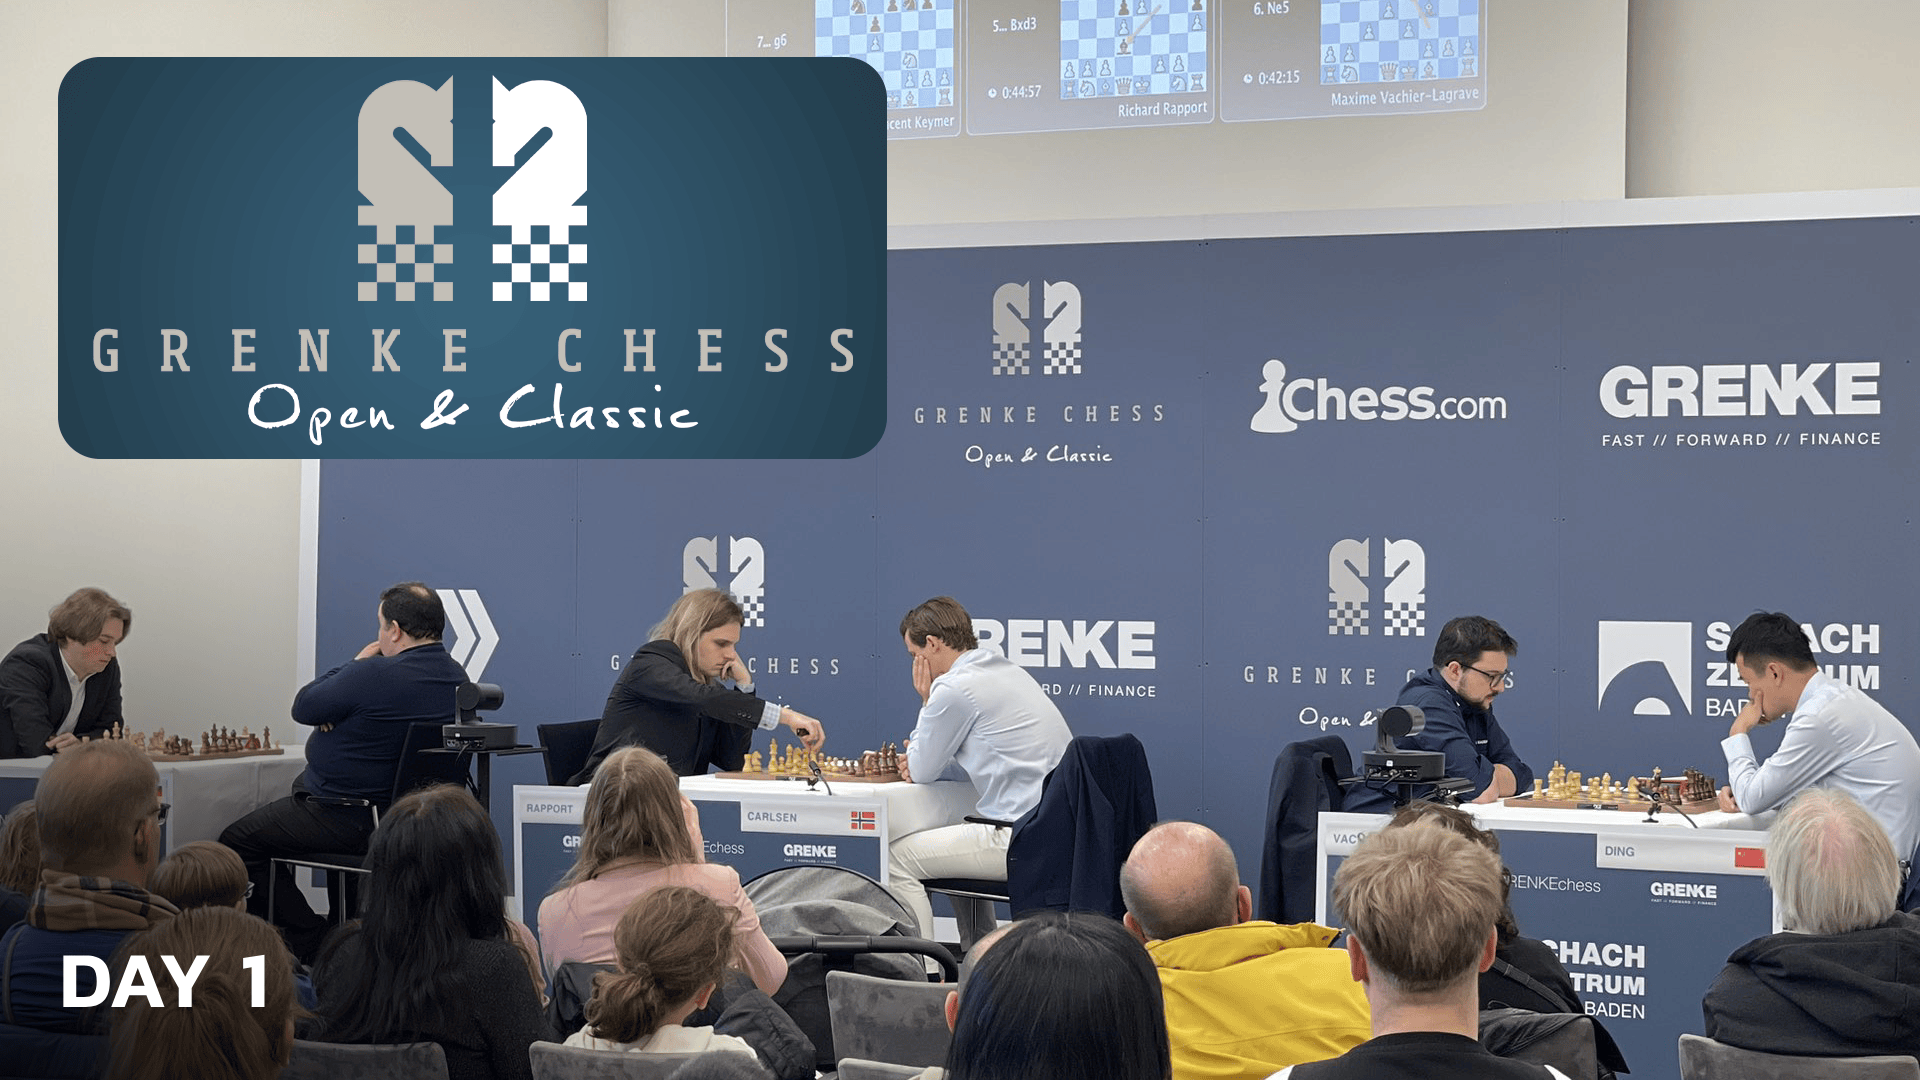 Rapport 击败 Carlsen，夺得 GRENKE 国际象棋经典赛冠军